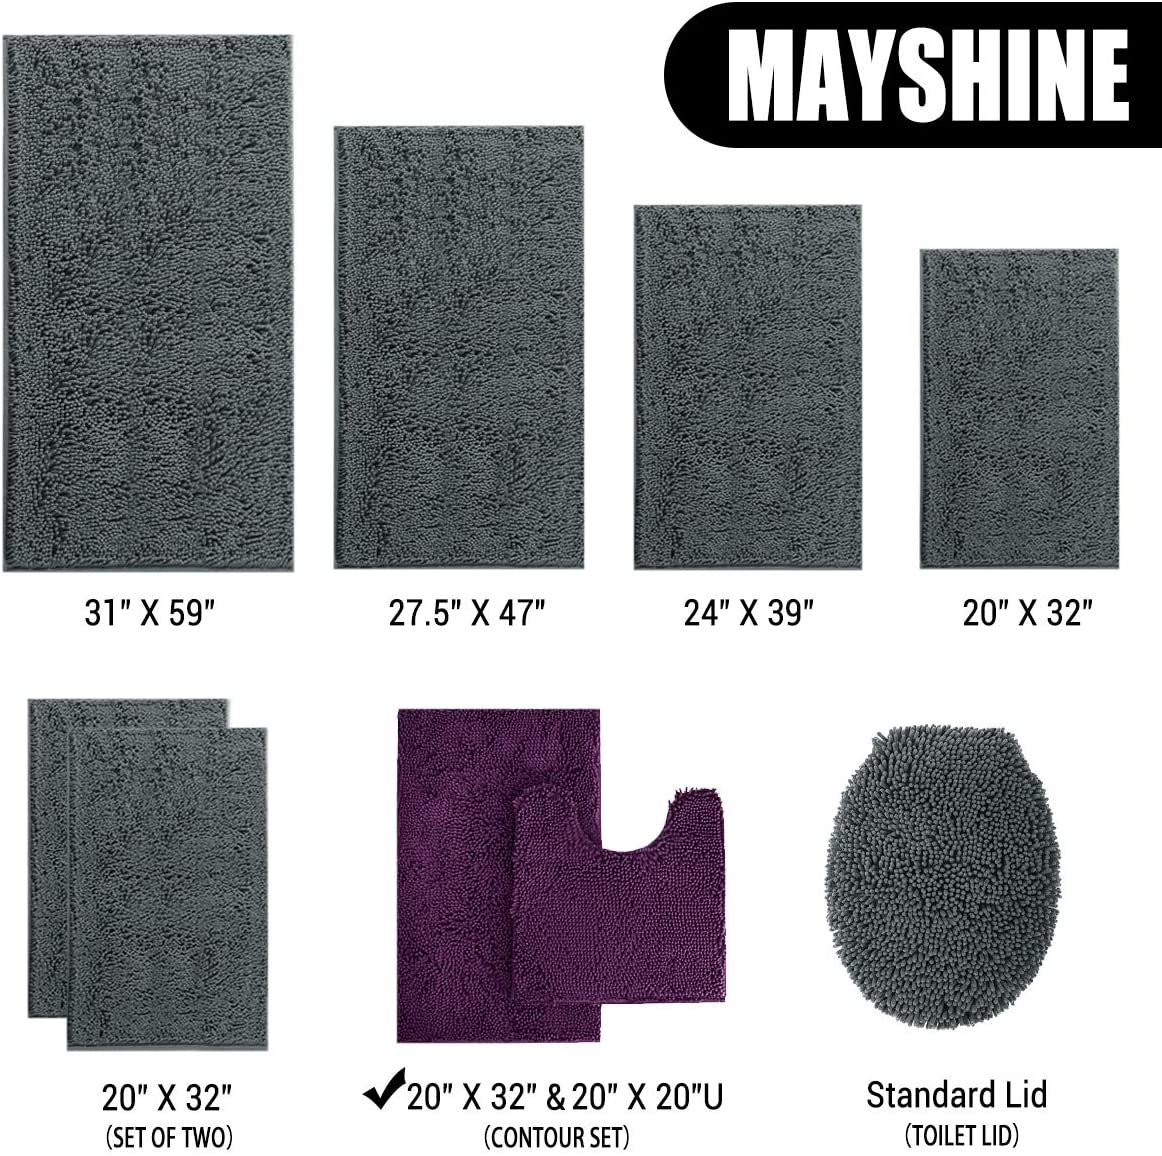 Mayshine Bathroom Rug Toilet Sets And Shaggy Non Slip Machine Washable Soft Micr 